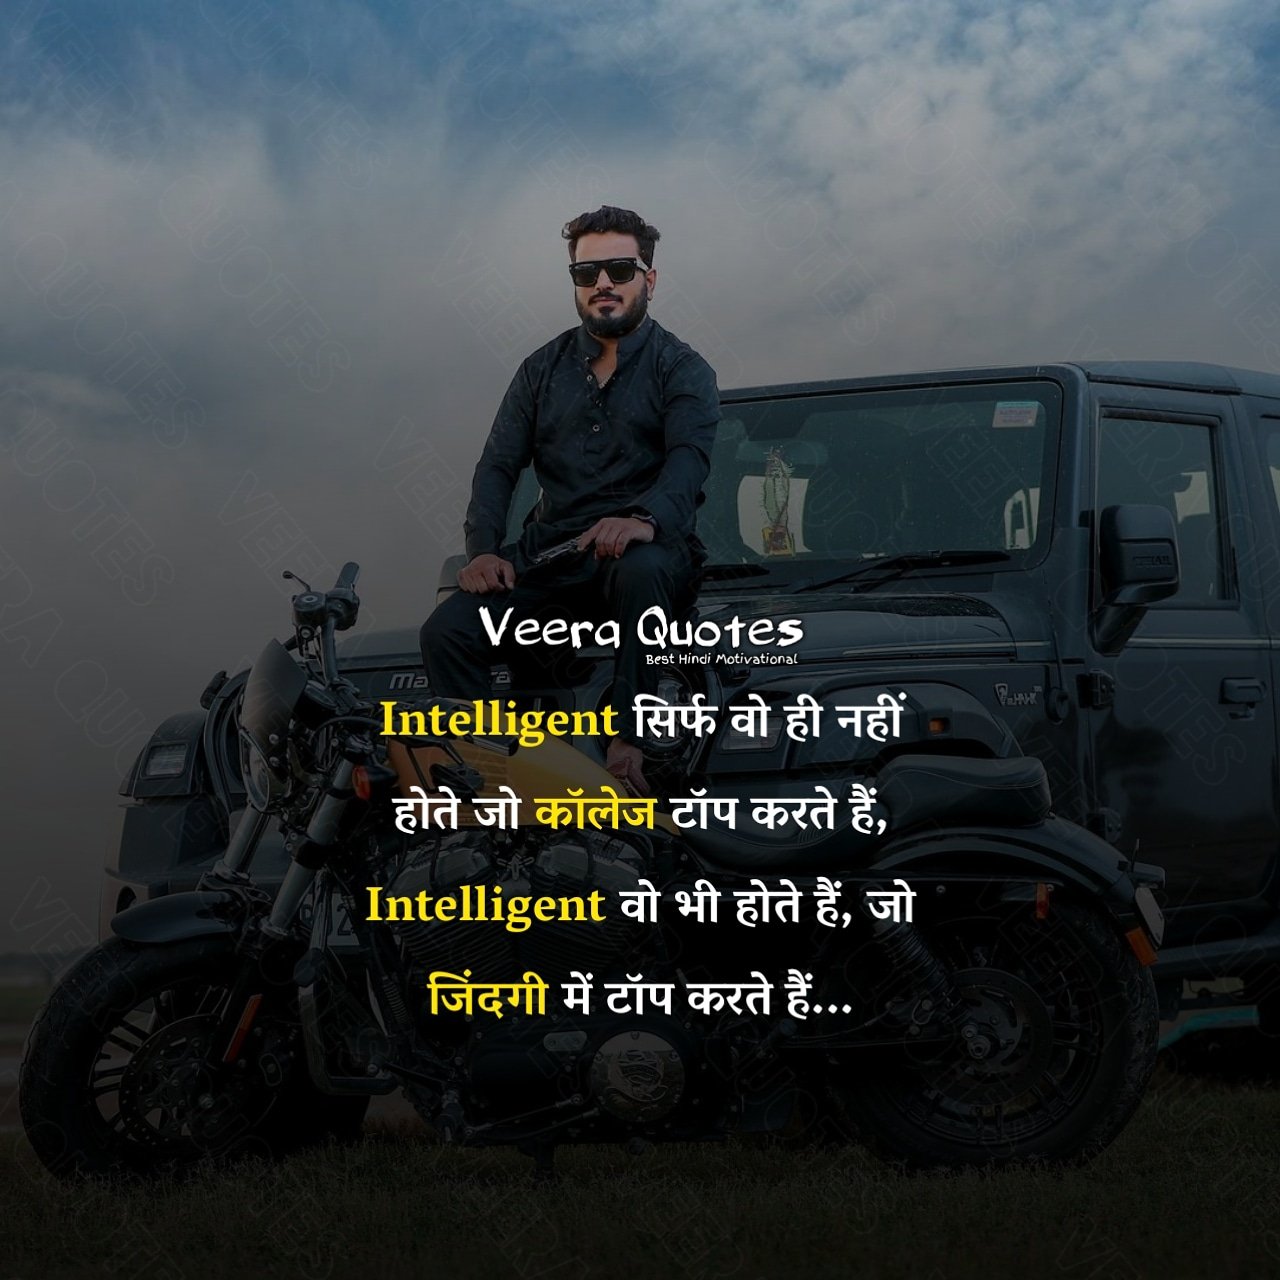 Veera Best Hindi Motivational Quotes on Twitter: 